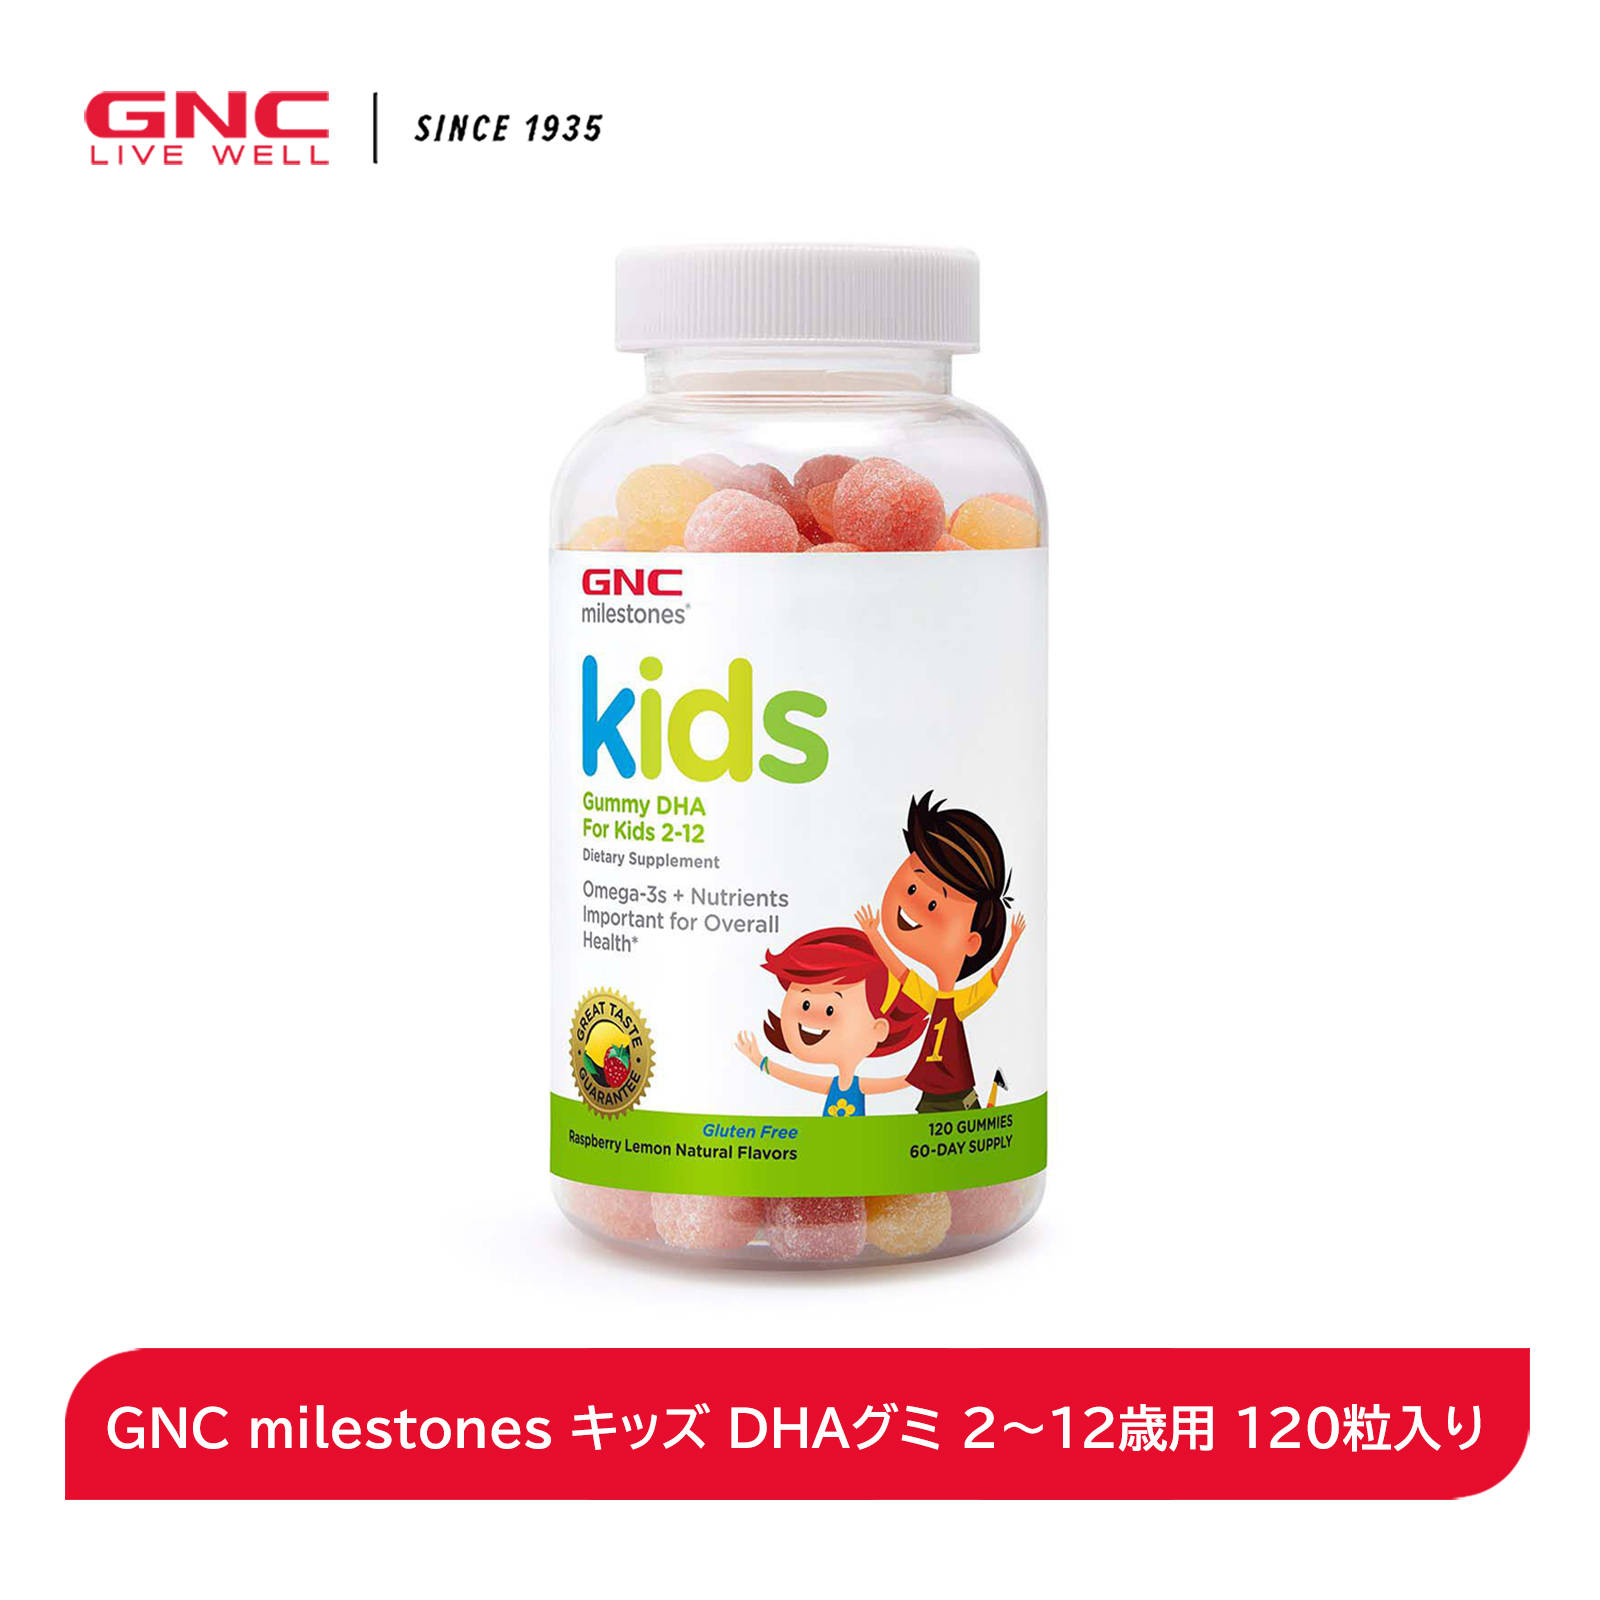 GNC milestones キッズ DHAグミ 2〜12歳用 120粒入りサプリ サプリメント ビタミンD3 子供 子供用サプリ DHA EPA オメガ３ ビタミンD3 学習 健康 成長 キッズ おいしい 栄養